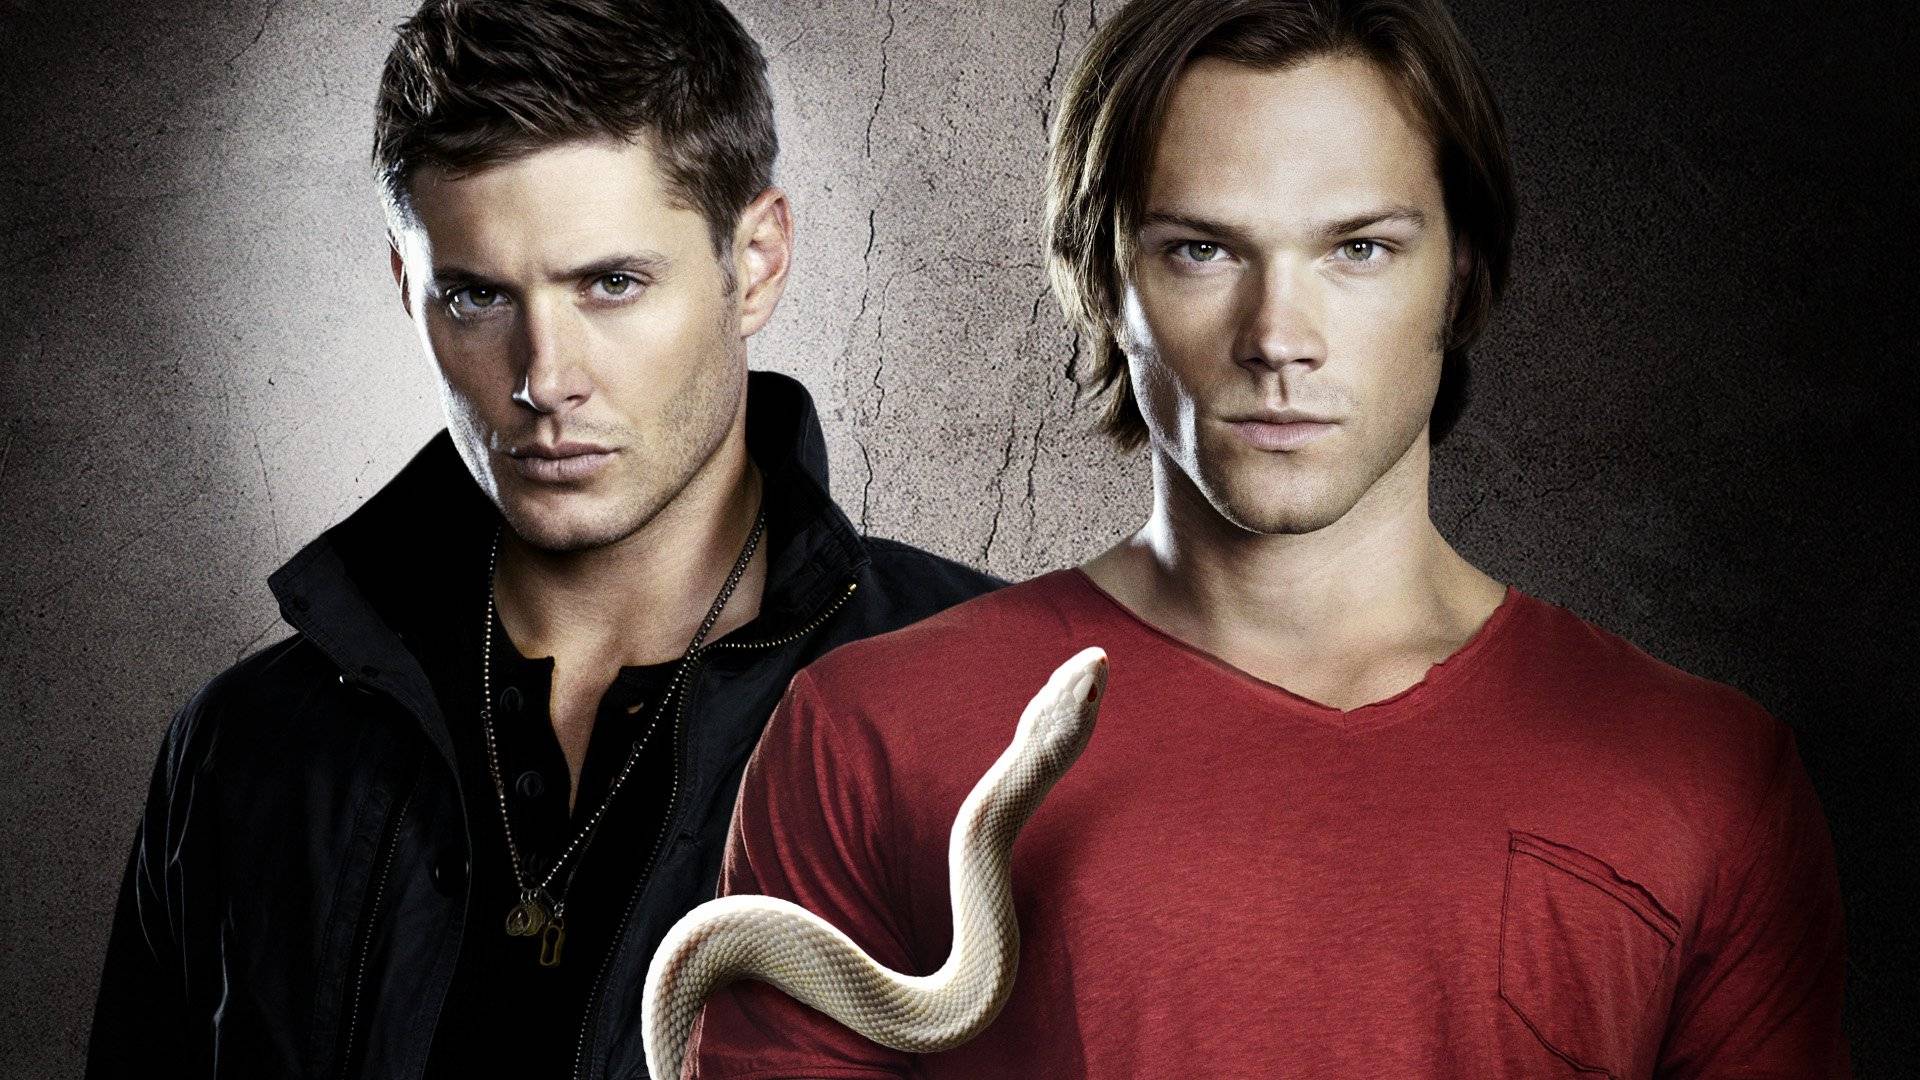 Supernatural Season 6 (2010)